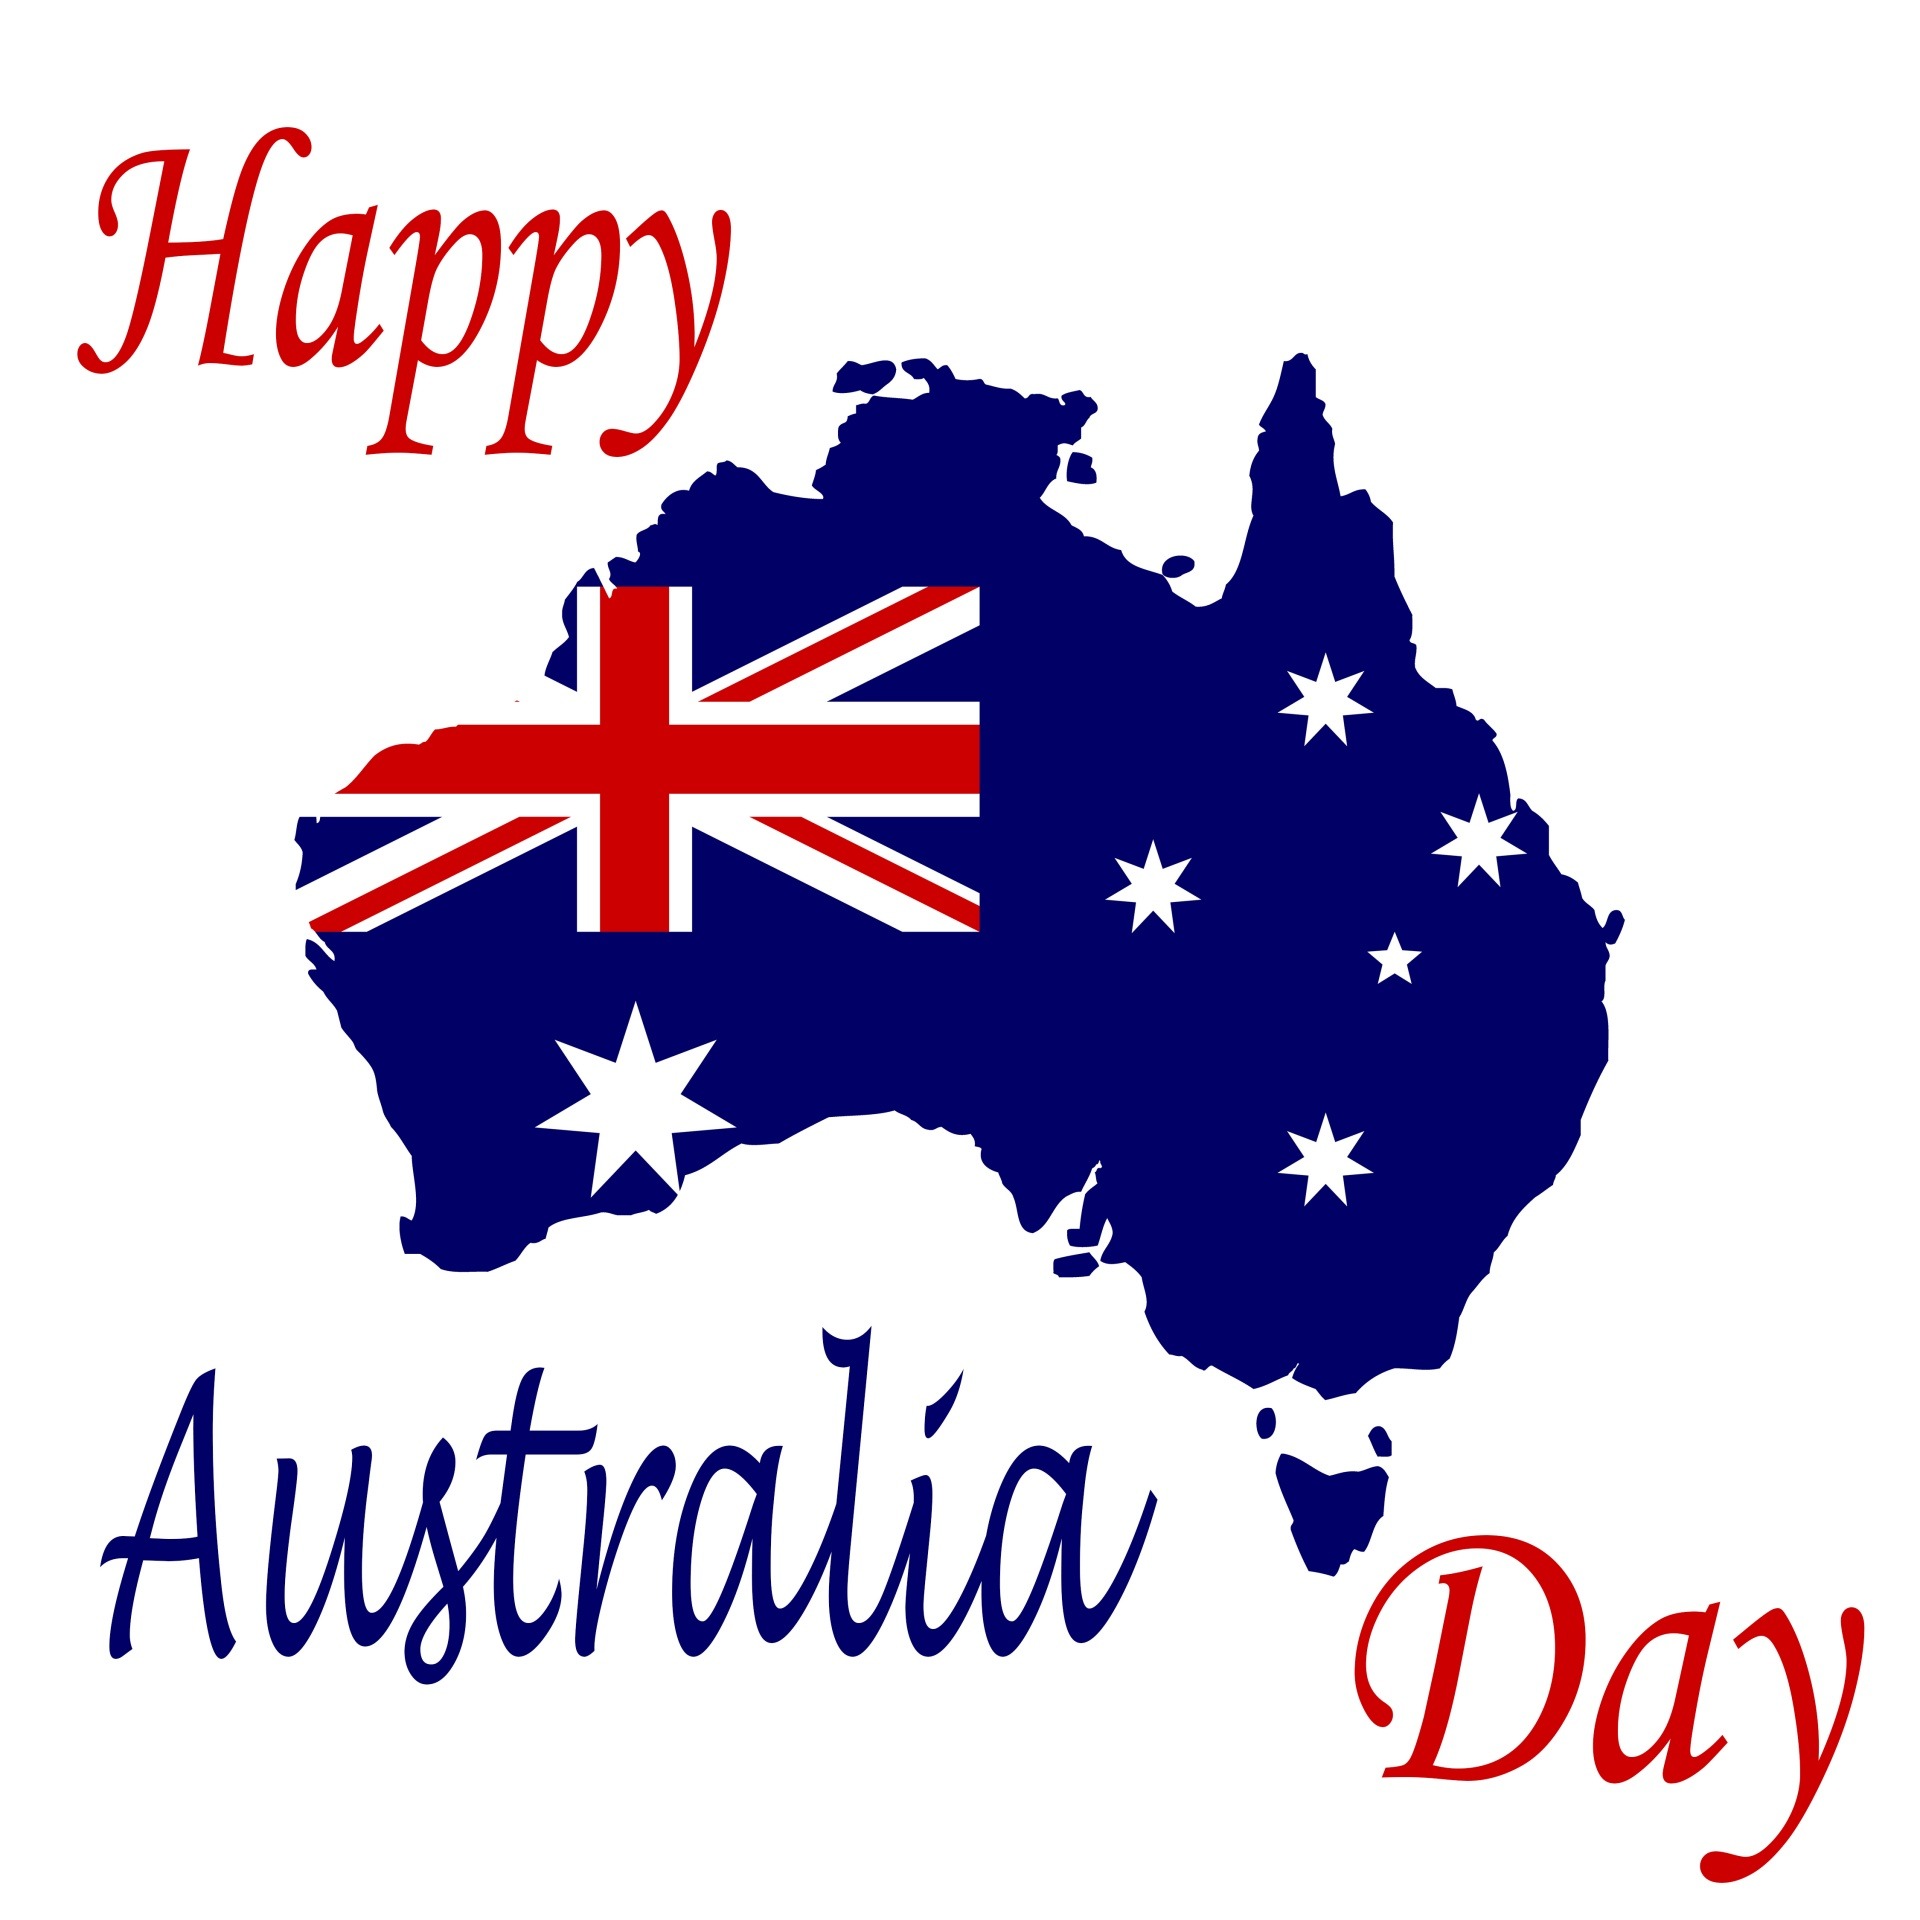 Australia day greetings